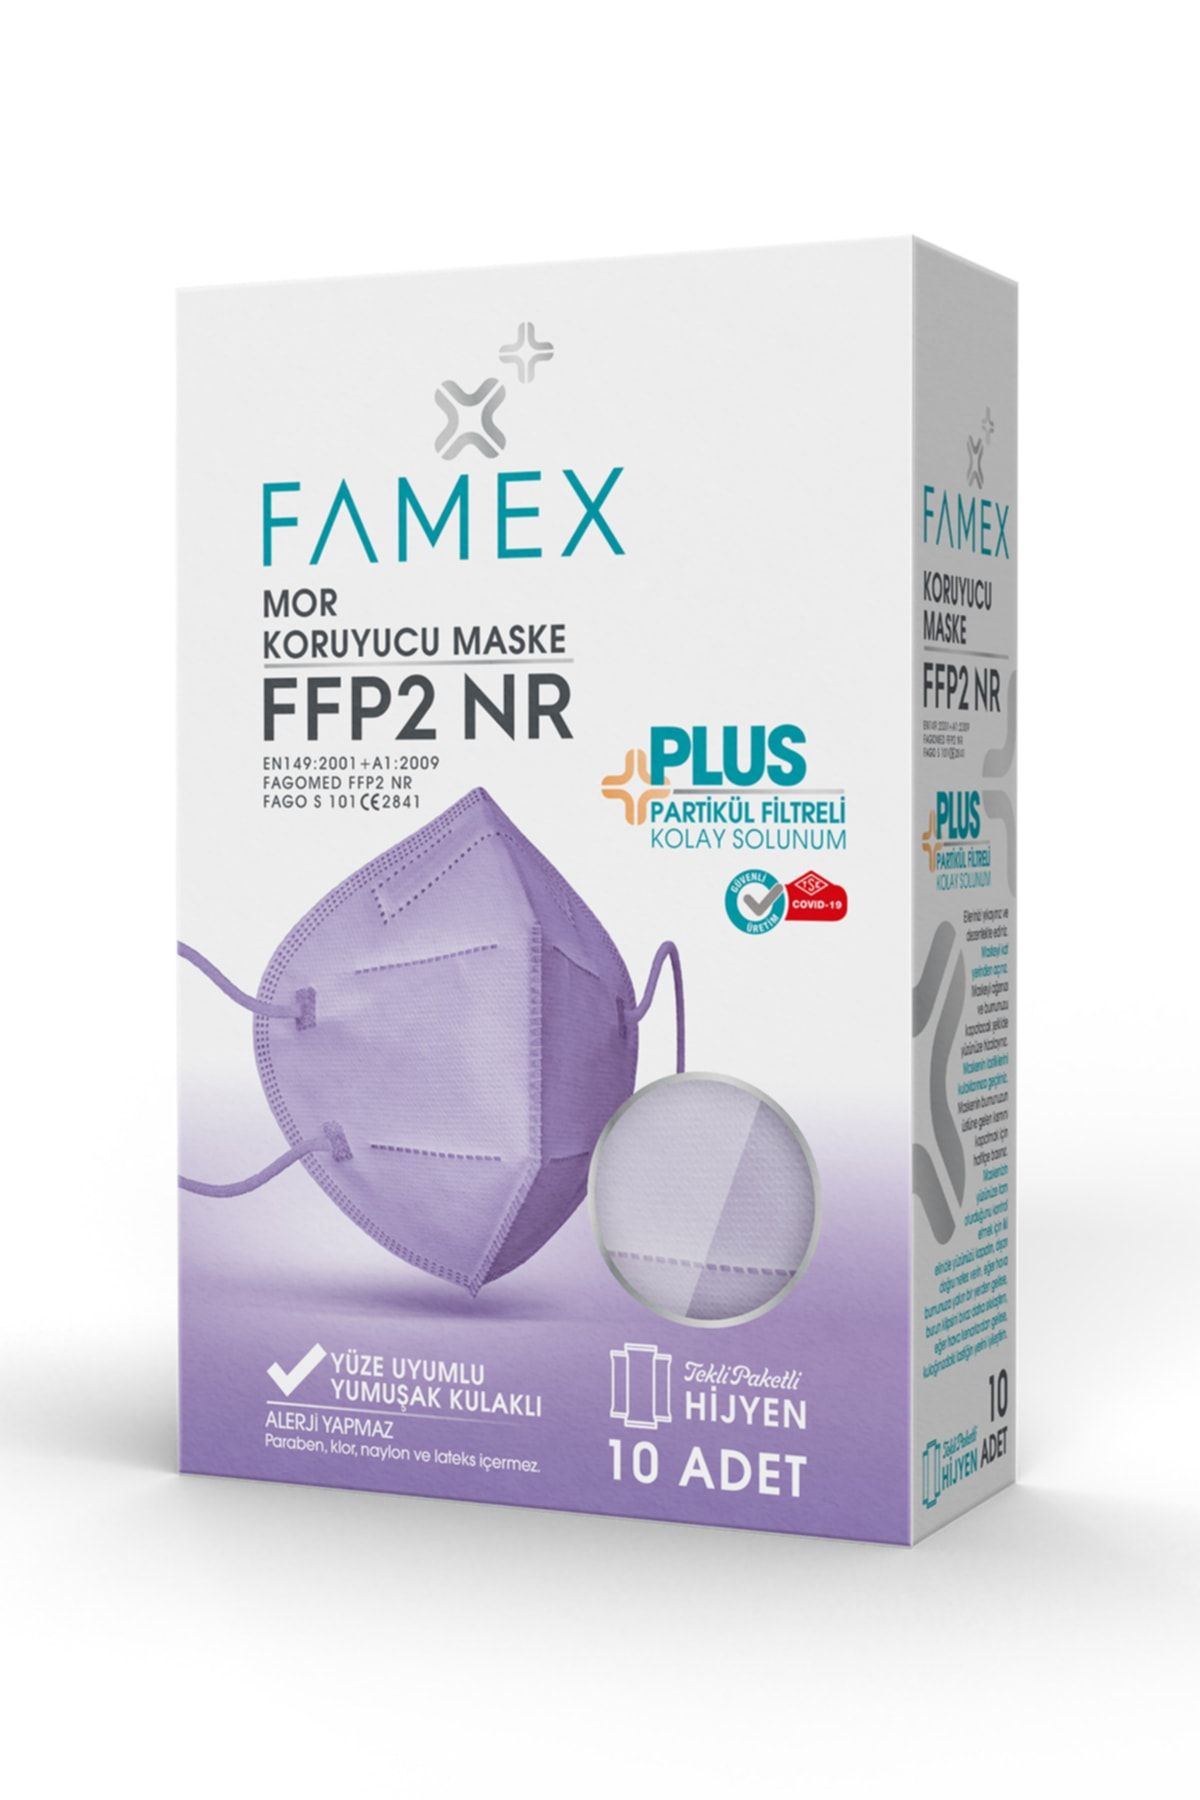 FAMEX N95 Ffp2 Koruyucu Maske Mor Renk 10 Adet Tekli Paket Duck Modeli